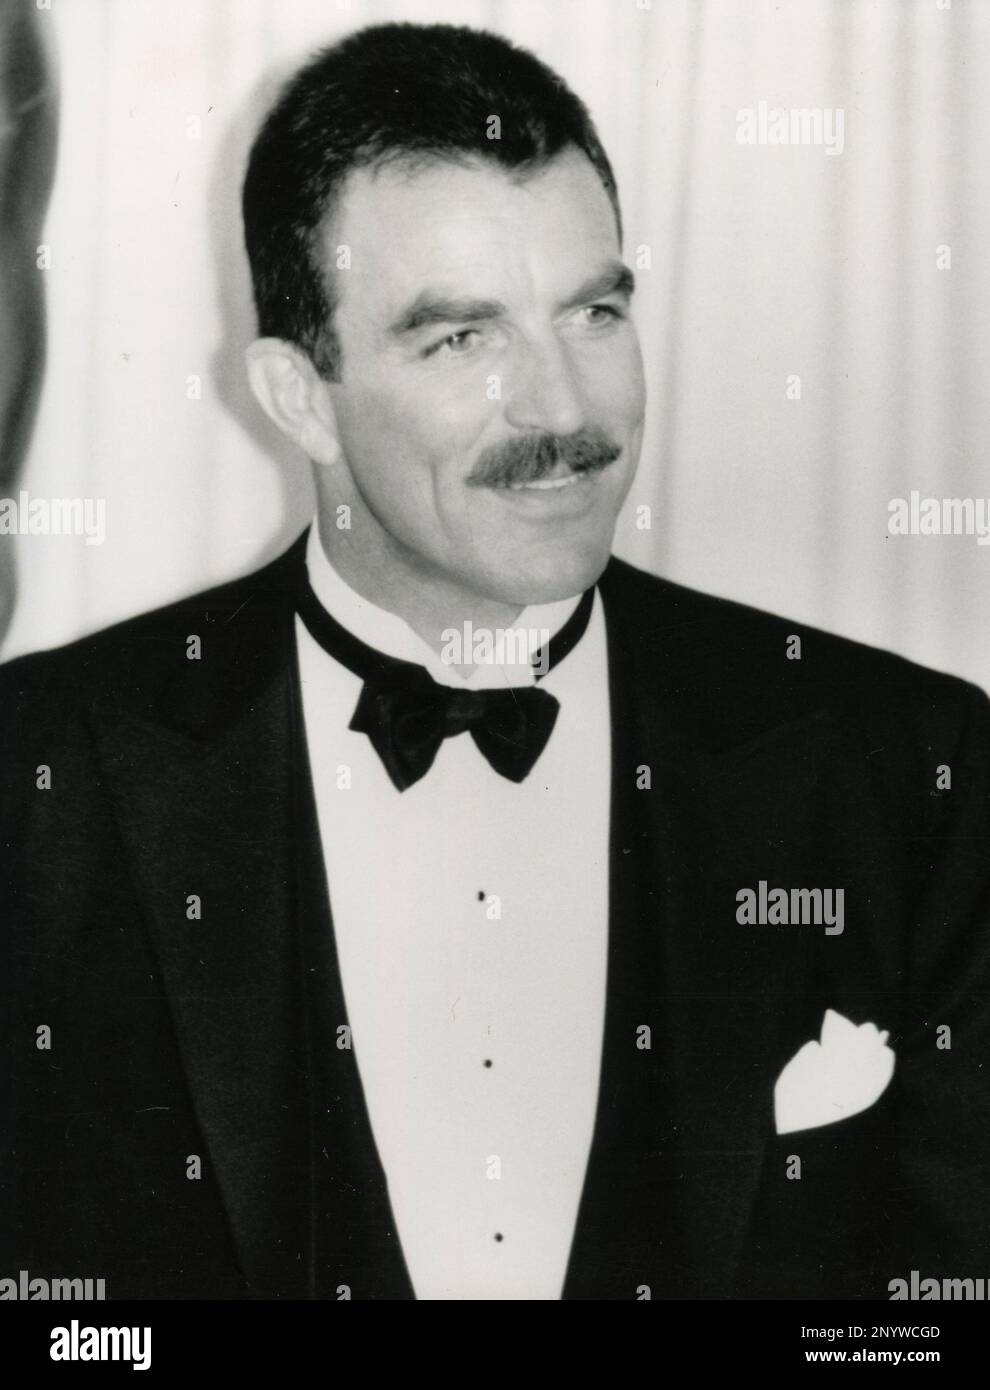 American actor Tom Selleck, USA 1988 Stock Photo - Alamy